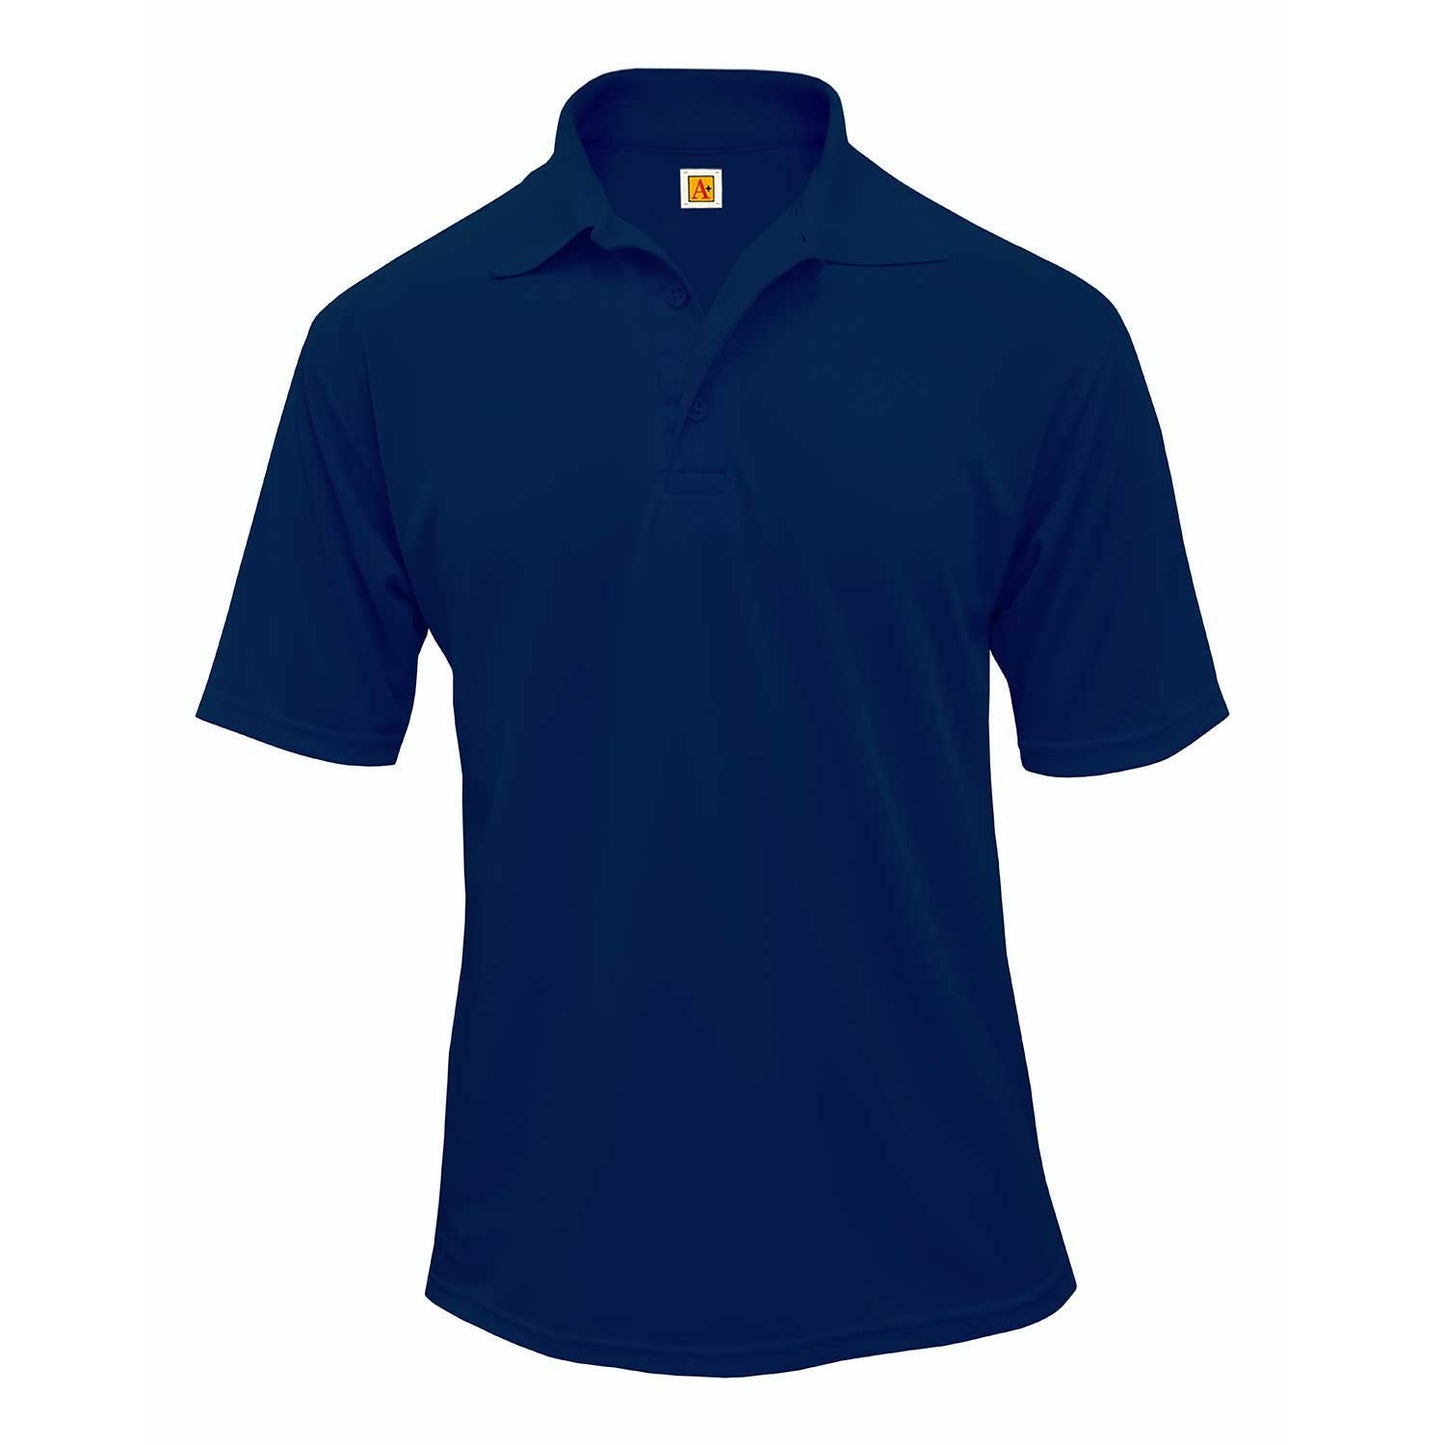 Performance Dri-fit Jersey Knit Short Sleeve Shirt (Unisex) w/Logo - 1103